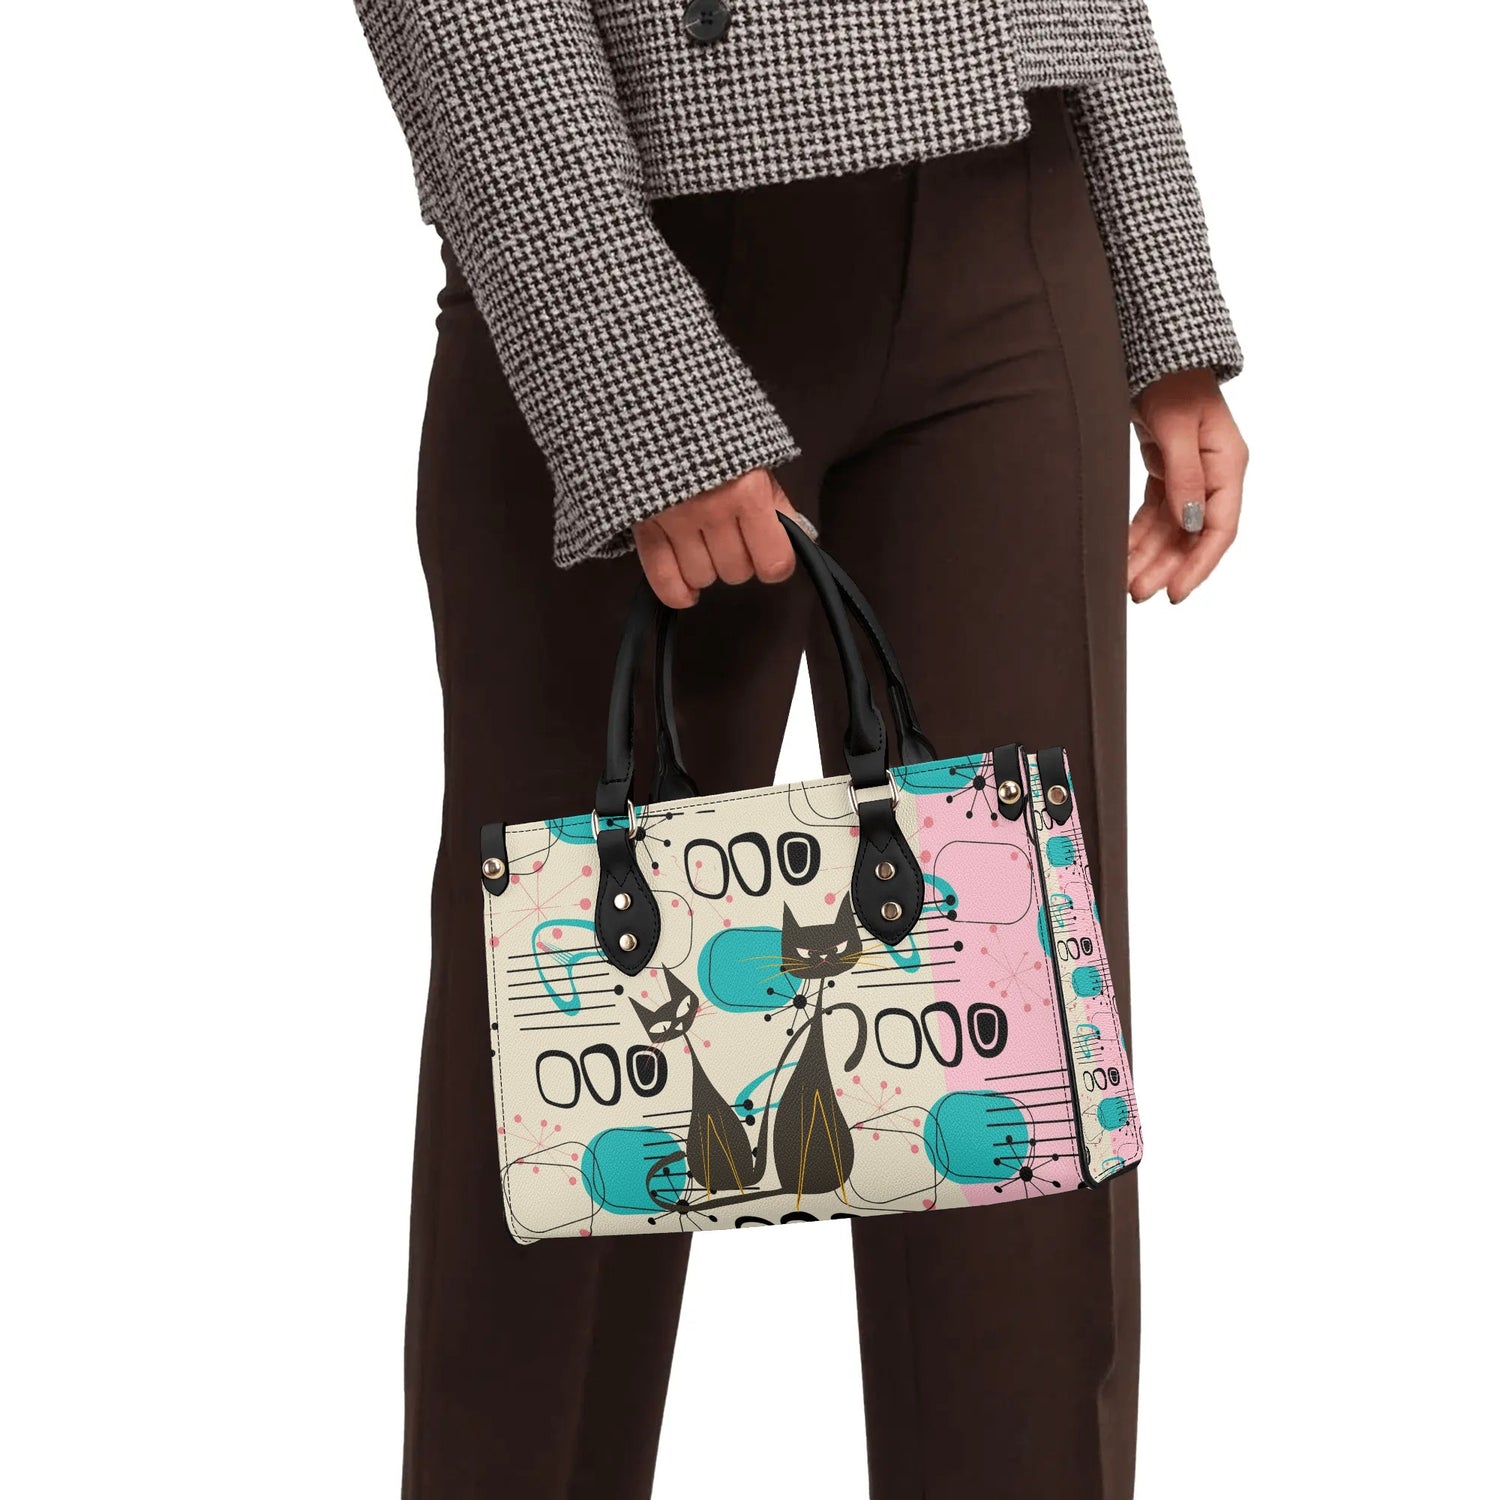 Mid Century Modern Atomic Cat Handbag, Retro Pink, Turquoise, and Black Leather Bag